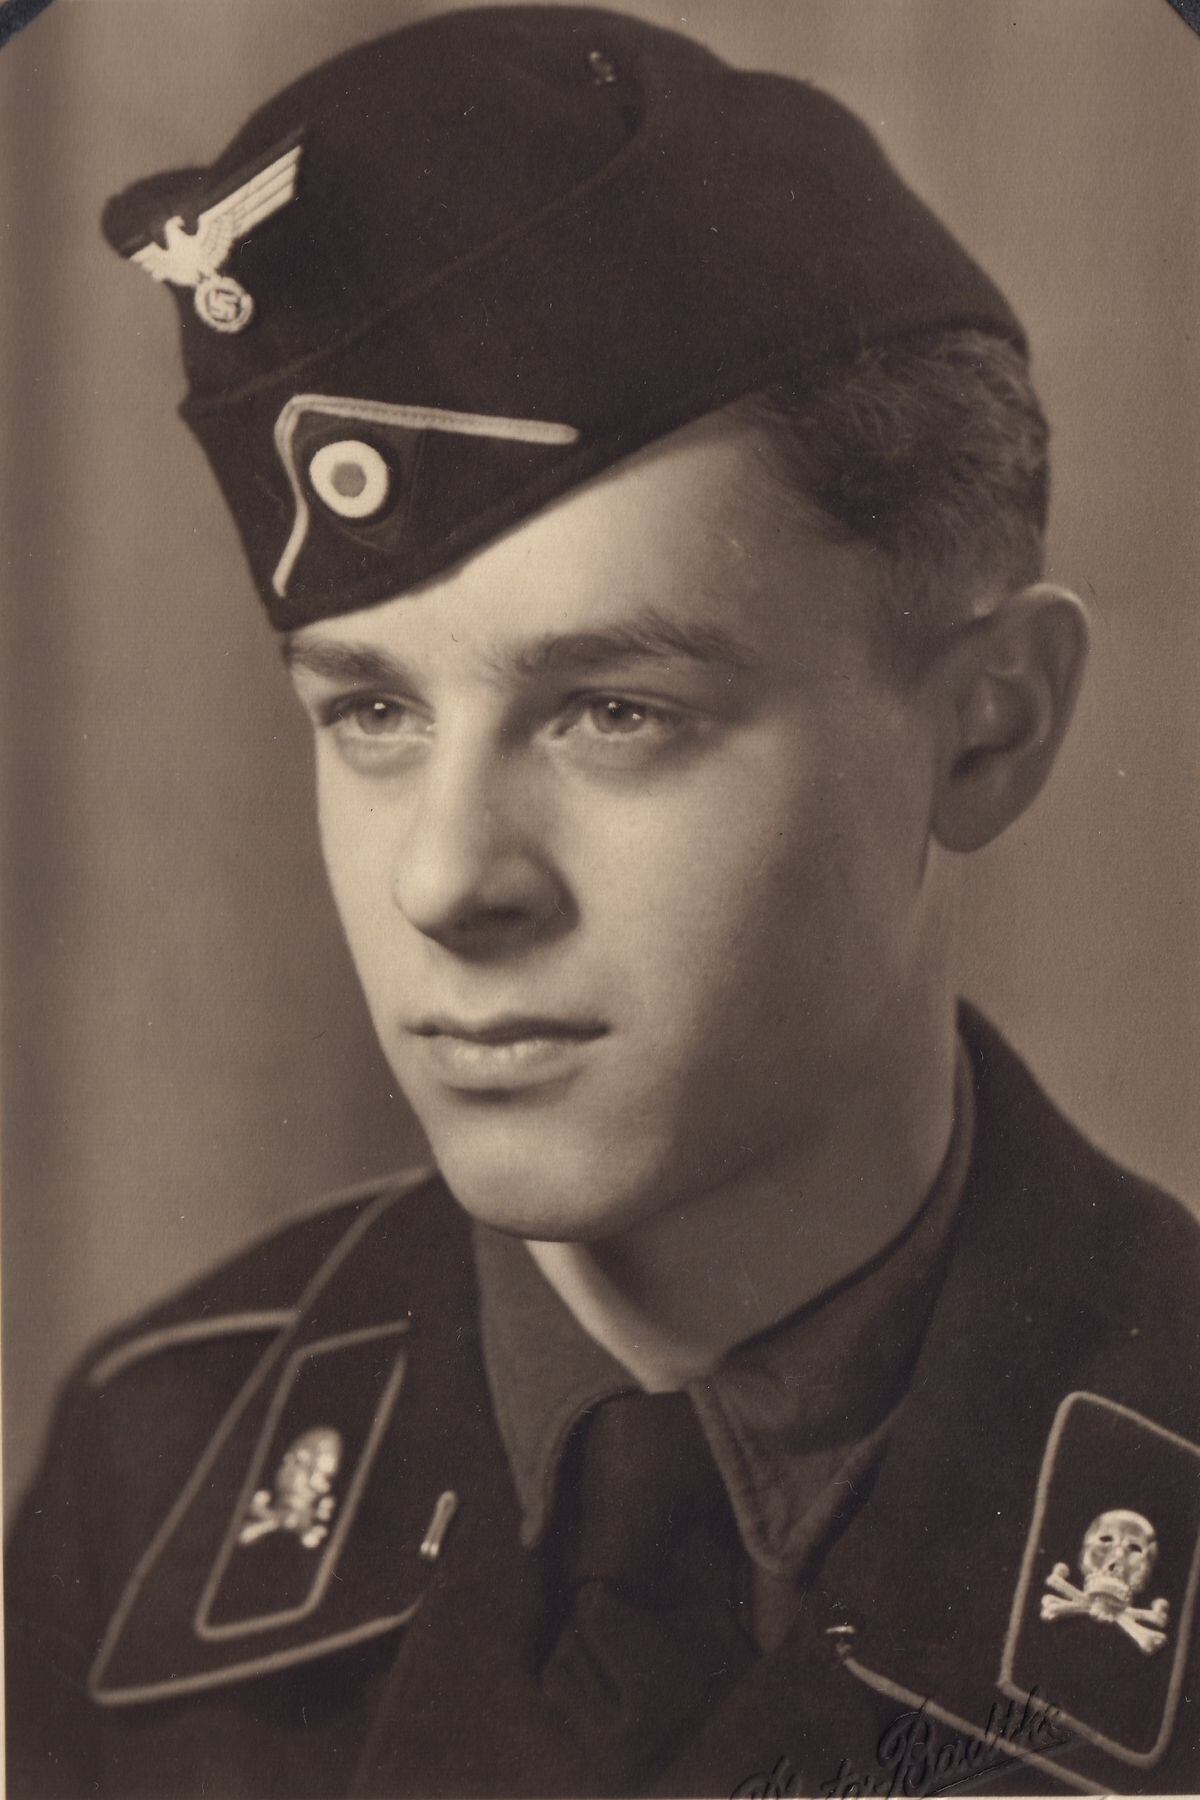  Karl Friedrich 'Charley' Koenig in uniform